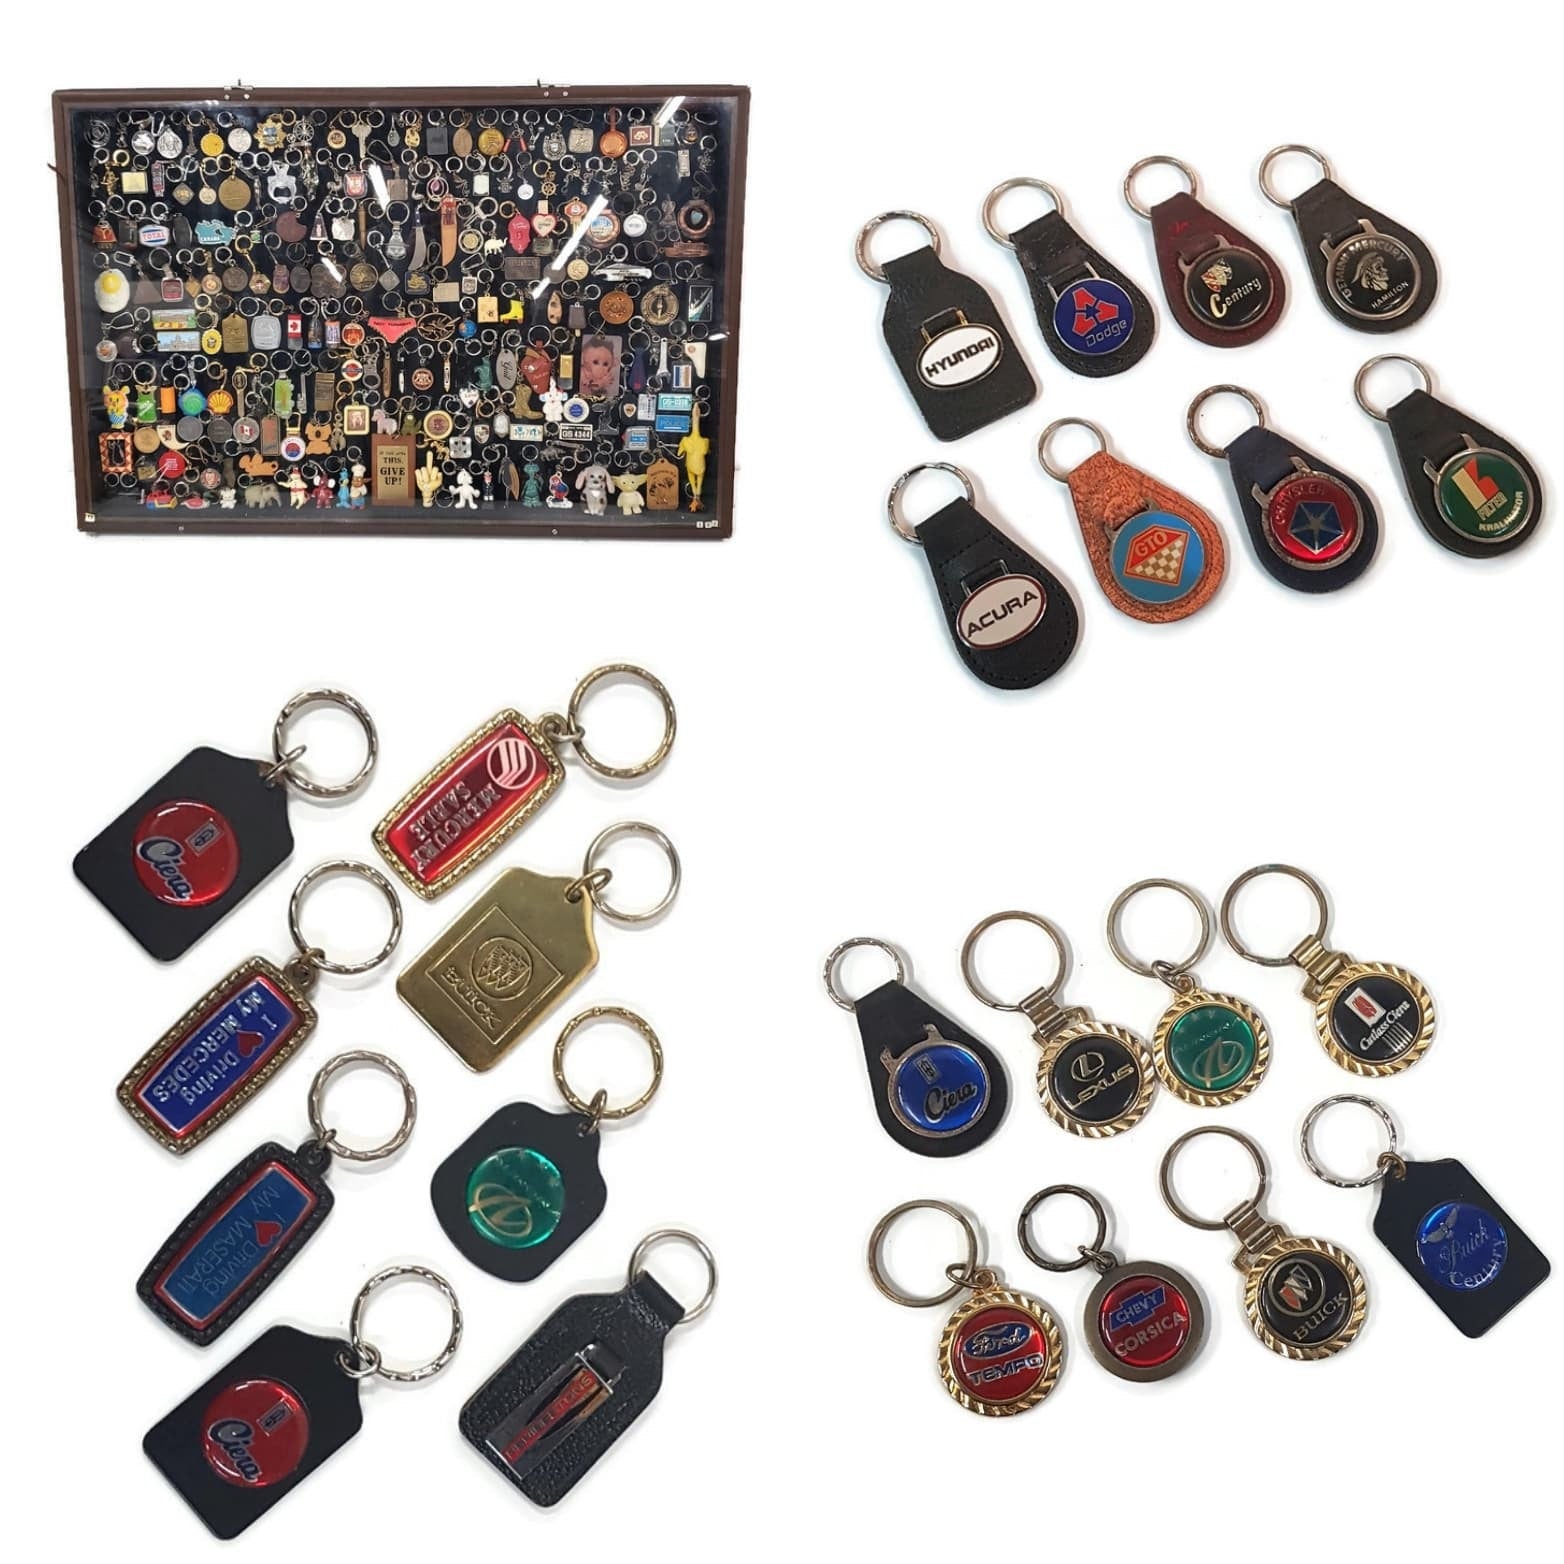 Mazda Key Chain Keychain Key Fob Keytag Vintage Automotove Keychain Gift Collectible